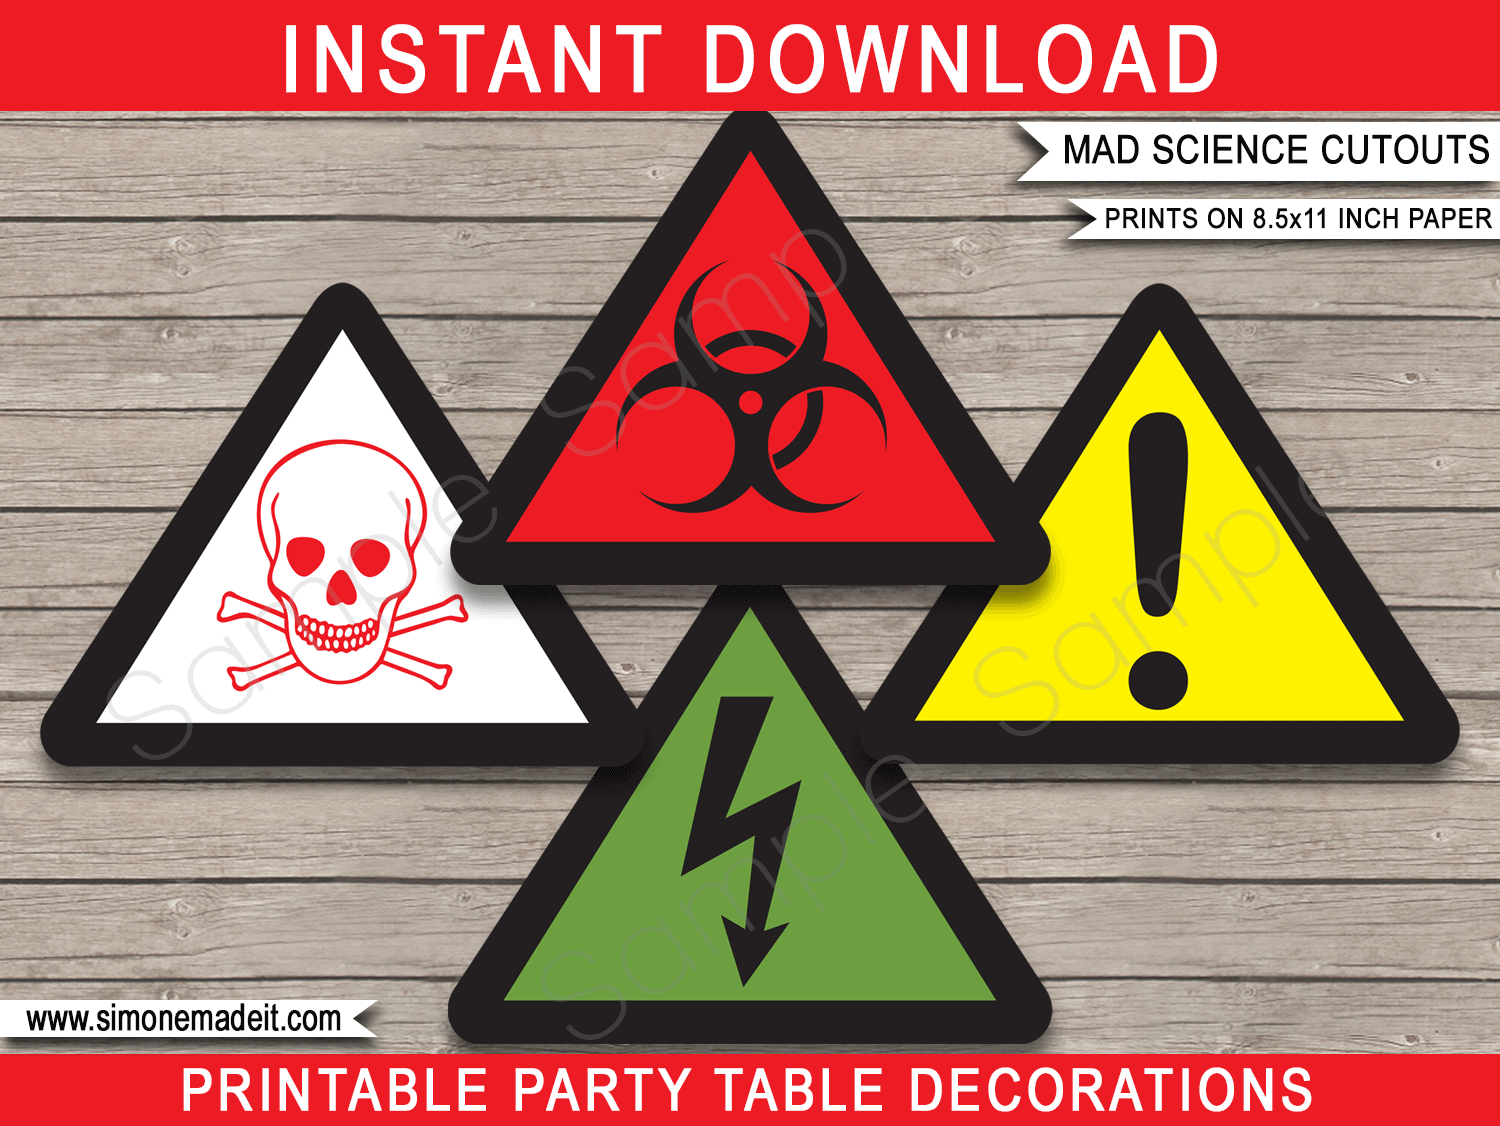 Printable Mad Science Party Decorations Cutouts | Birthday Party templates | Radioactive, Toxic, Warning, Biological Hazard | via SIMONEmadeit.com